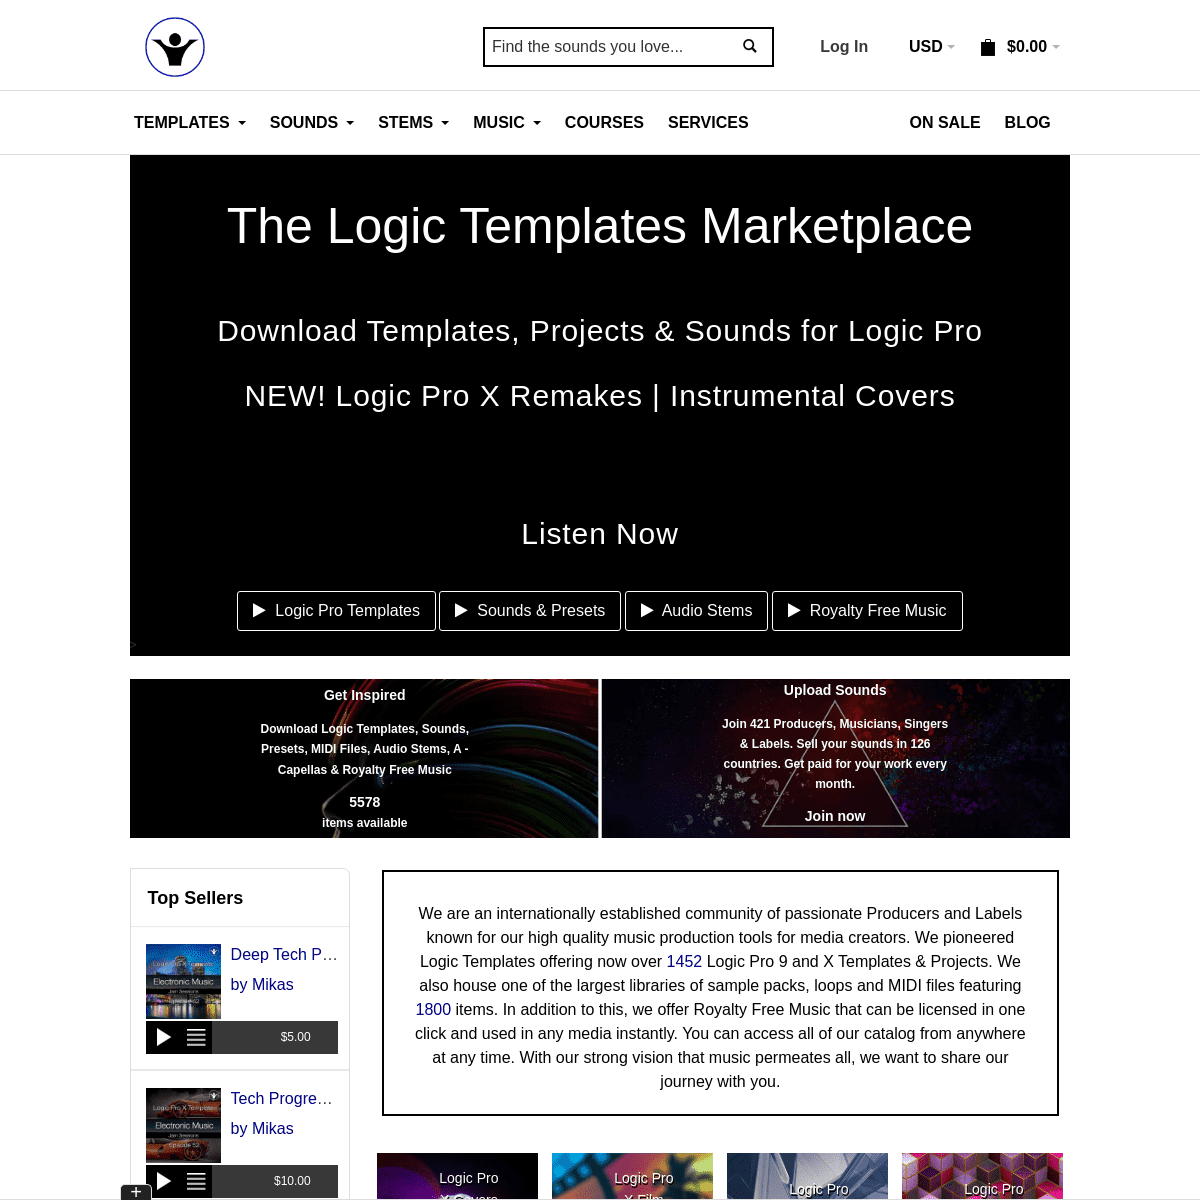 A complete backup of logictemplates.com